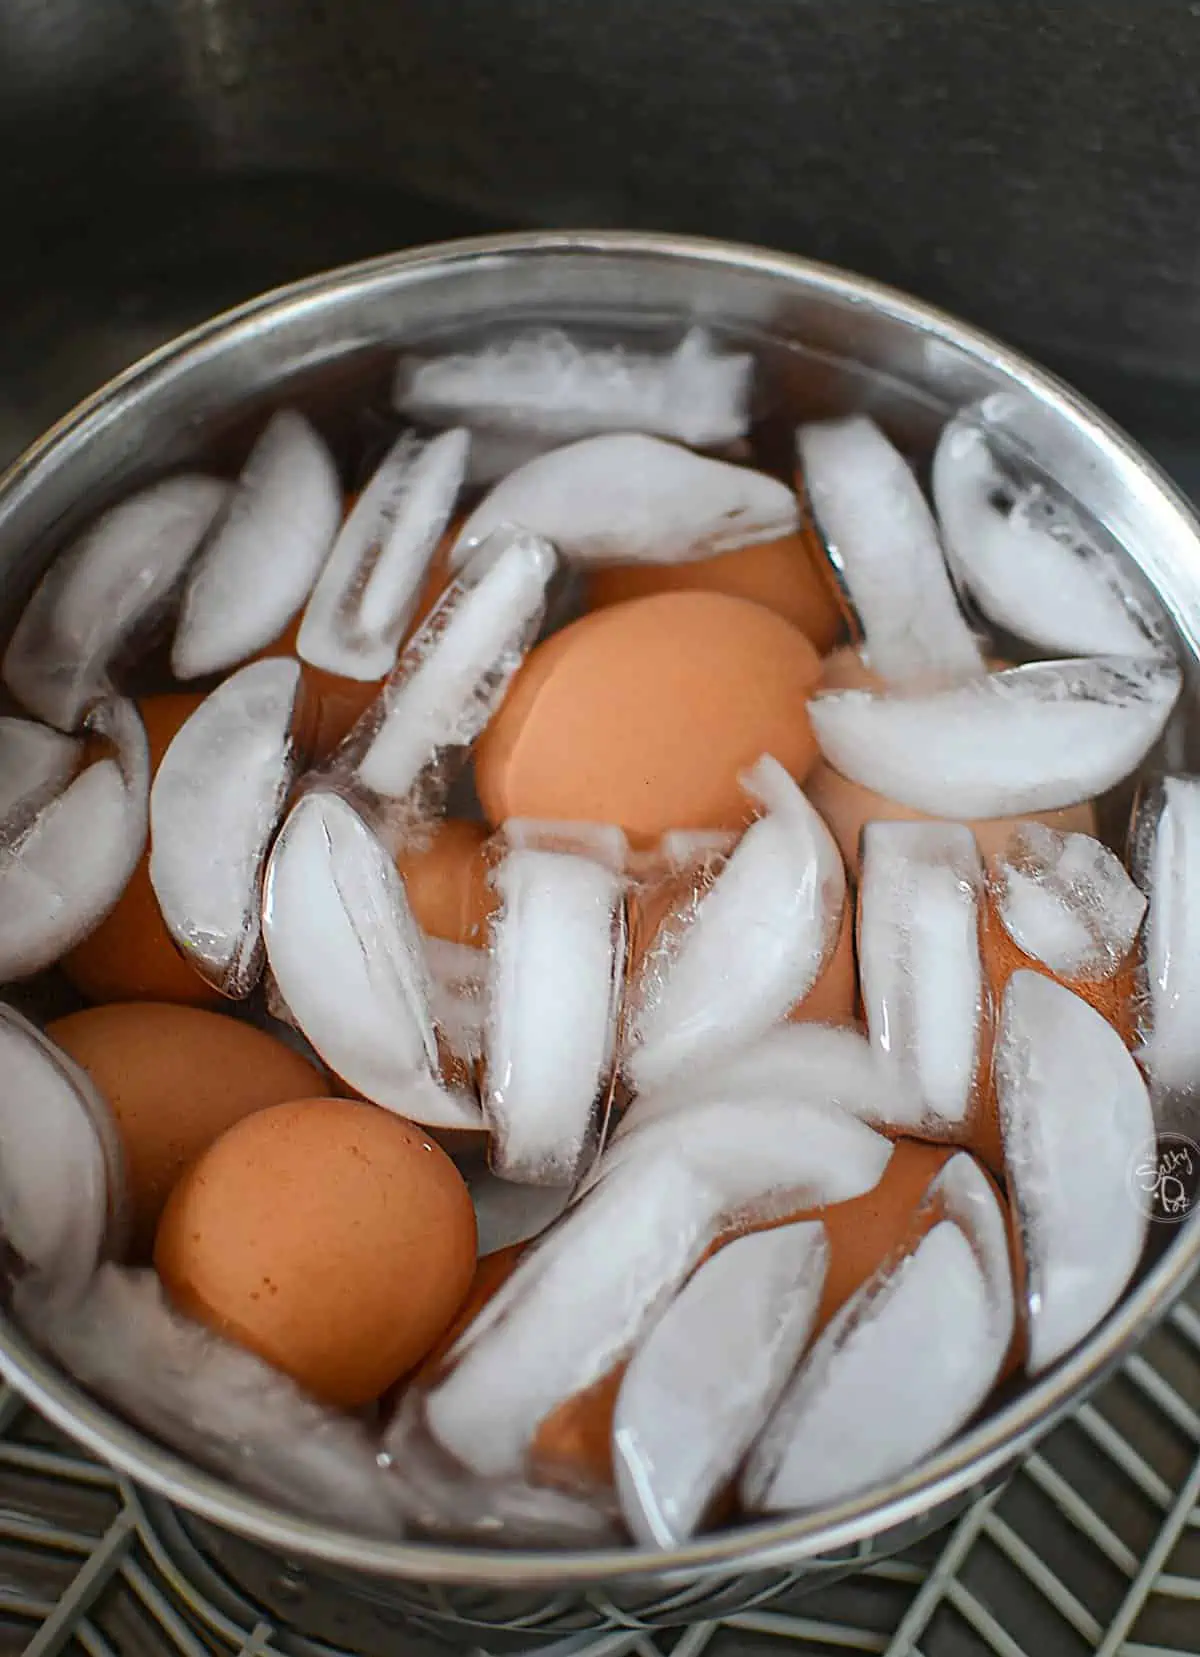 A dozen eggs sitting in iced water.